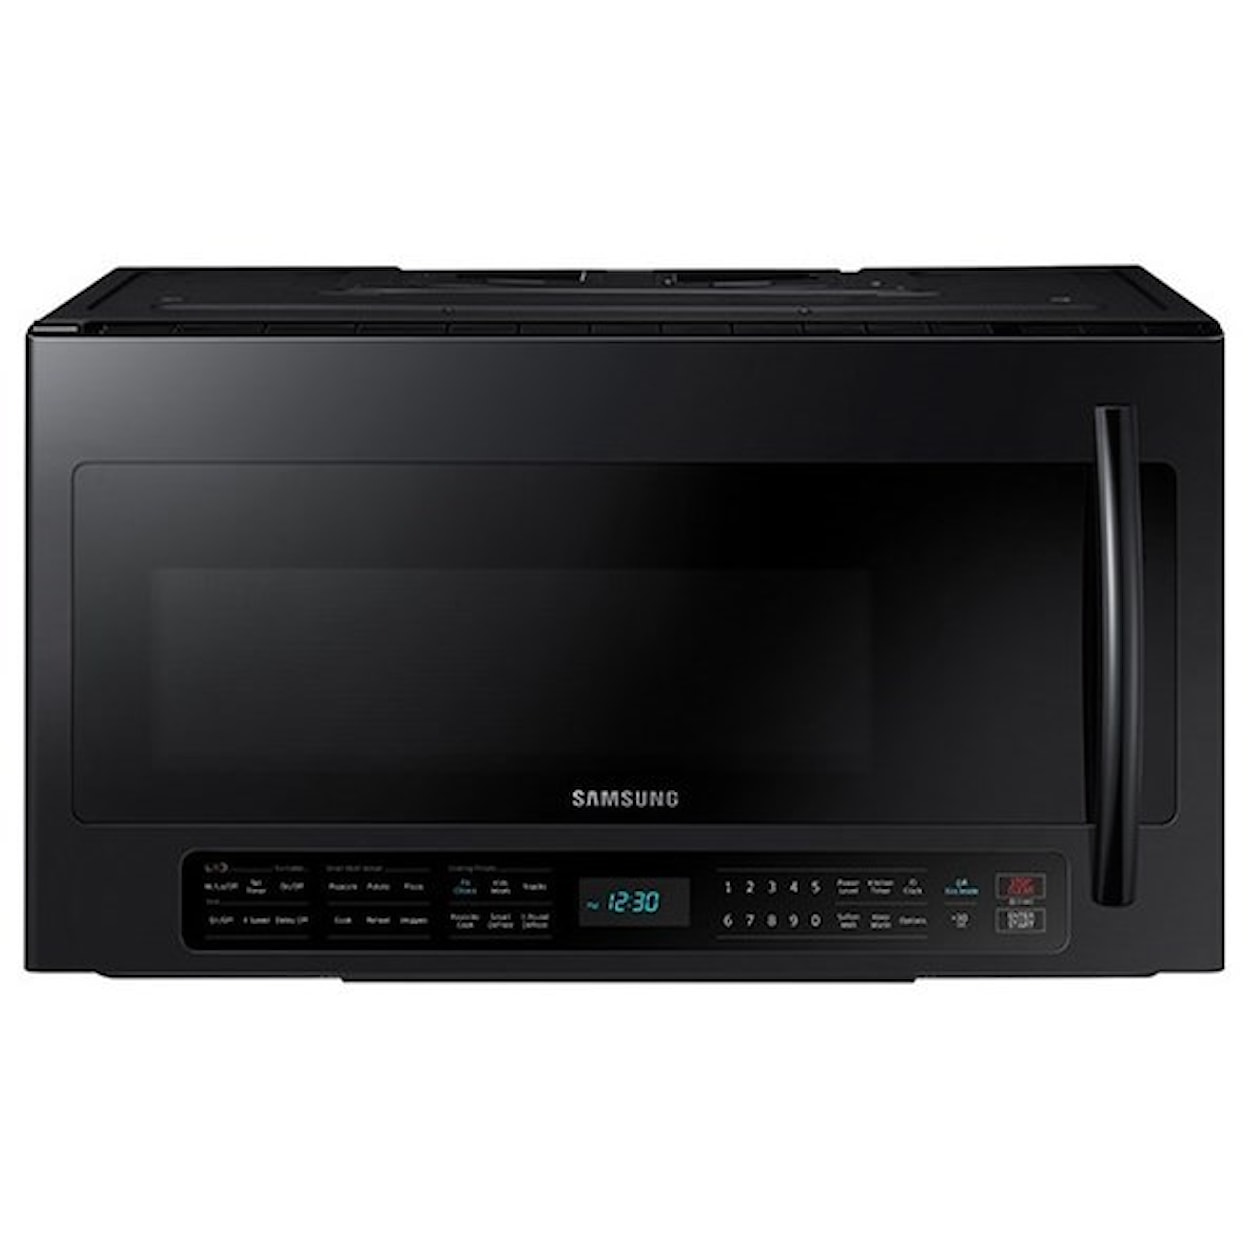 Samsung Appliances Microwaves 2.1 cu.ft. Over The Range Microwave